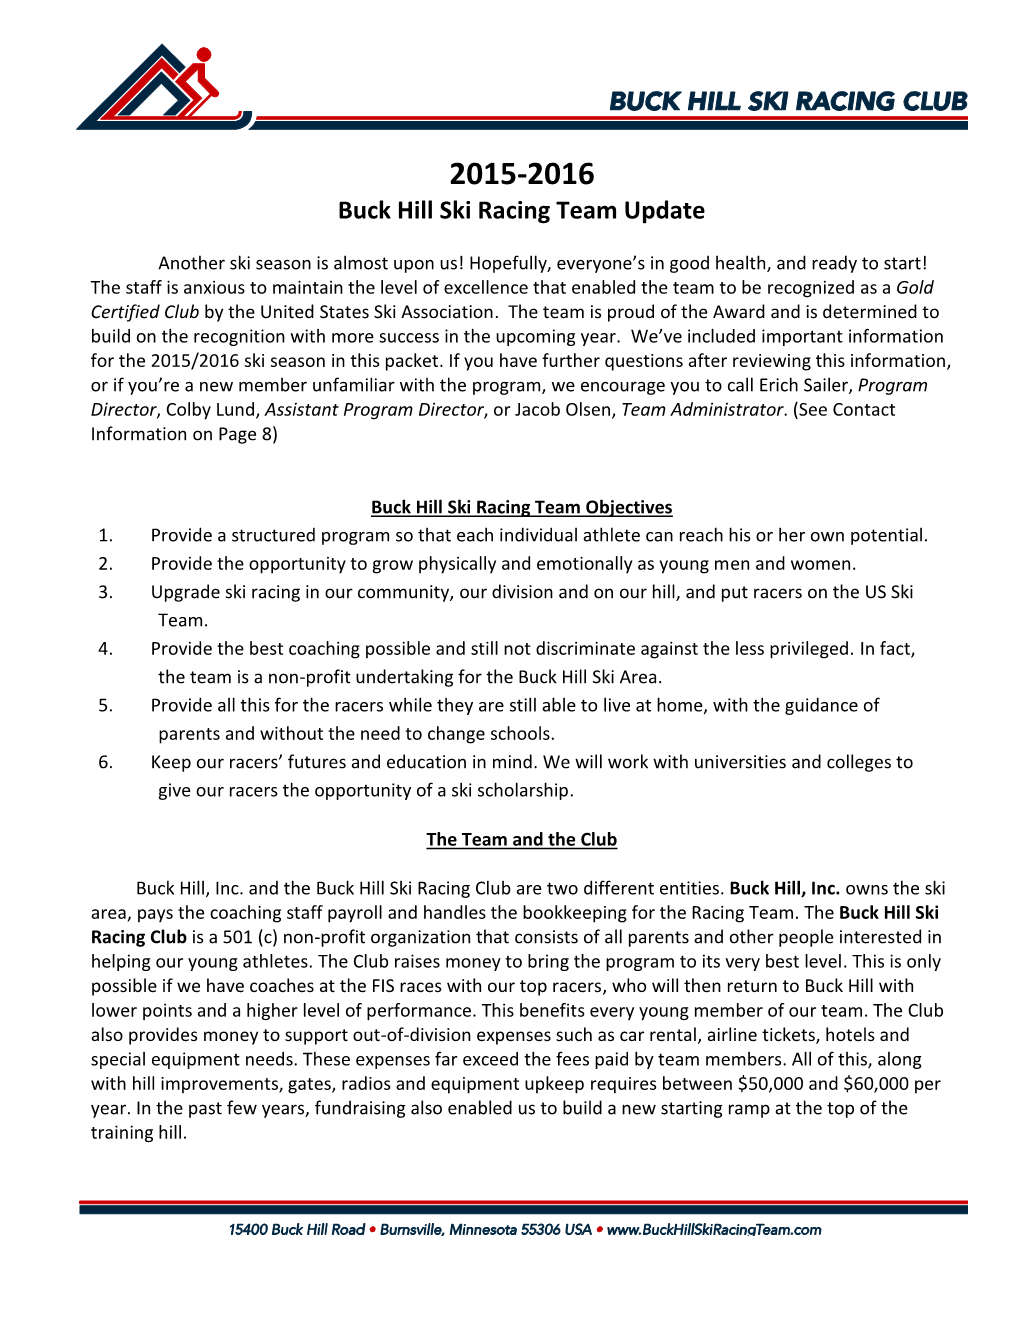 2015-2016 Buck Hill Ski Racing Team Update